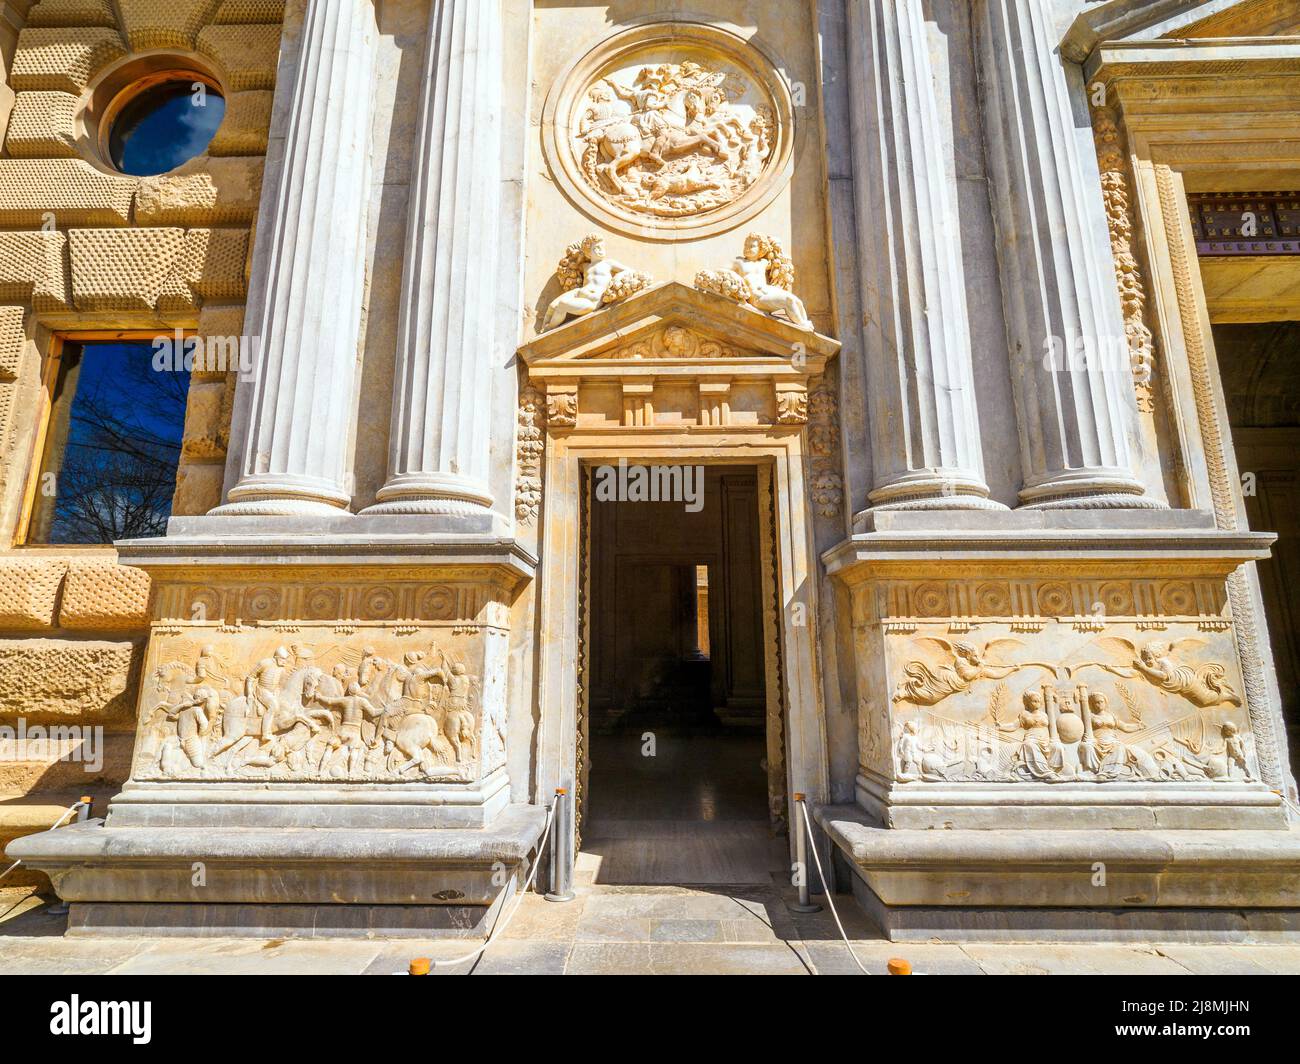 Palast von Karl V. Eingang- Alhambra Komplex - Granada, Spanien Stockfoto